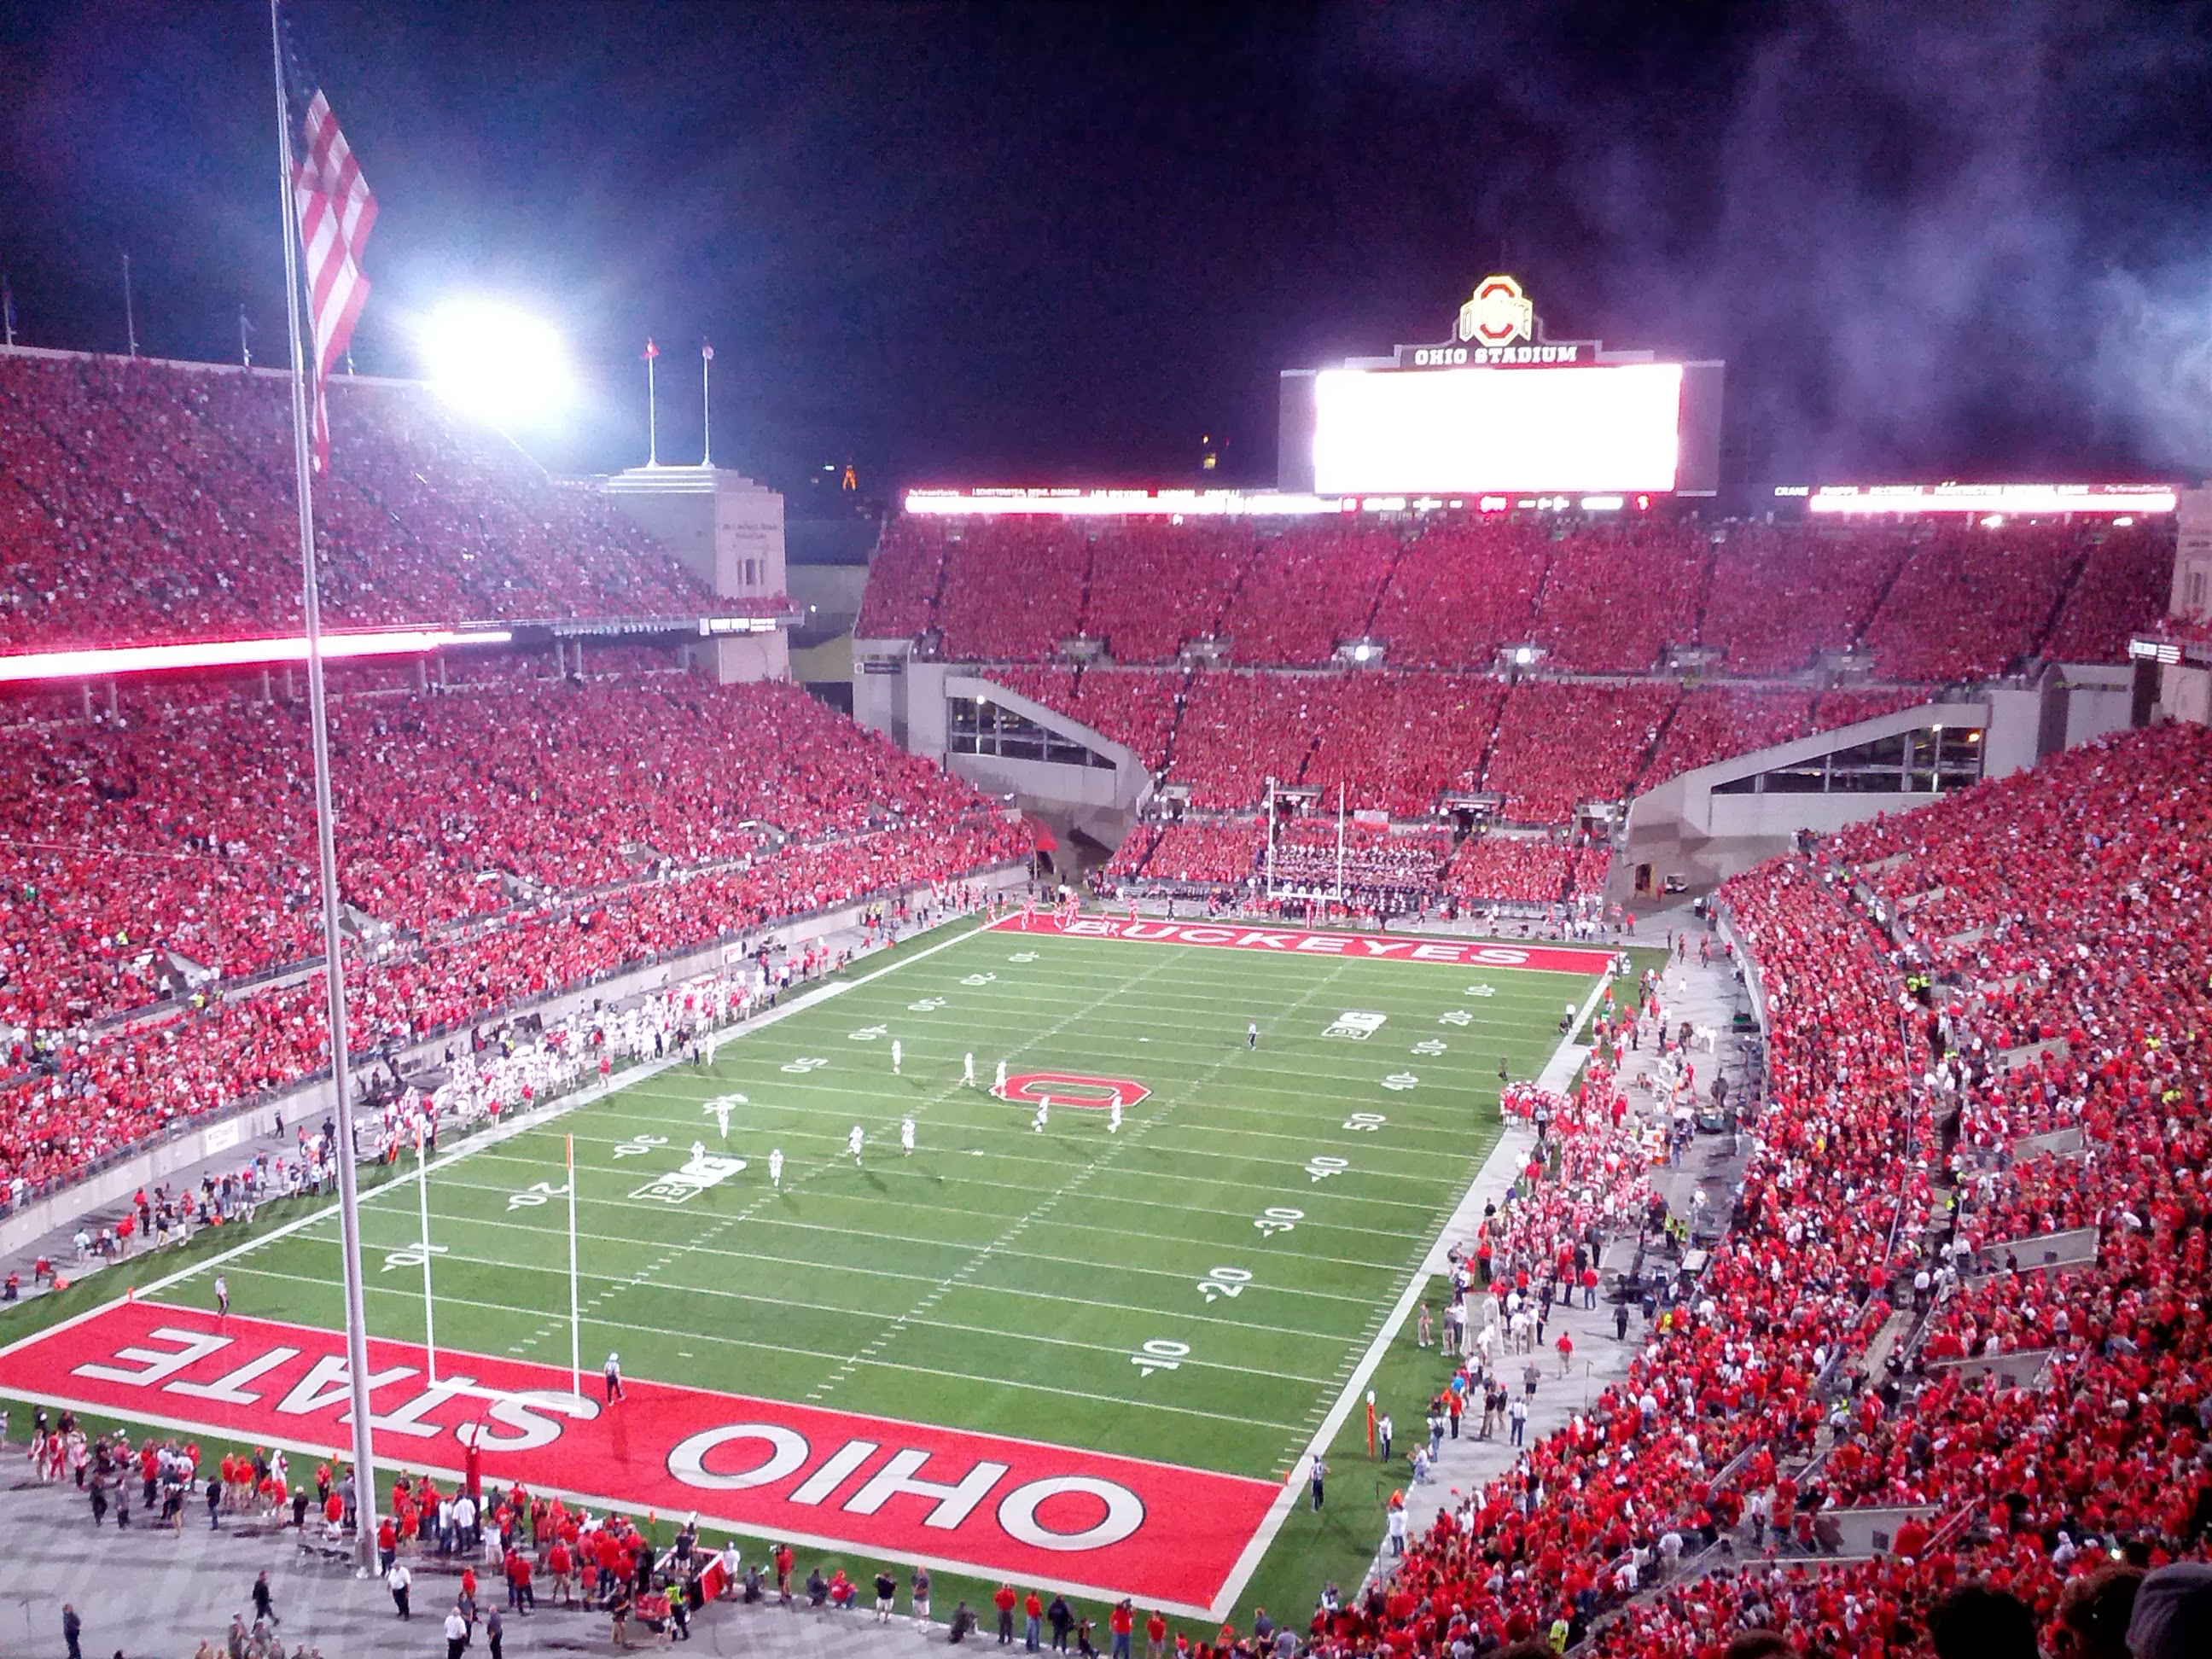 The Ohio State University football program